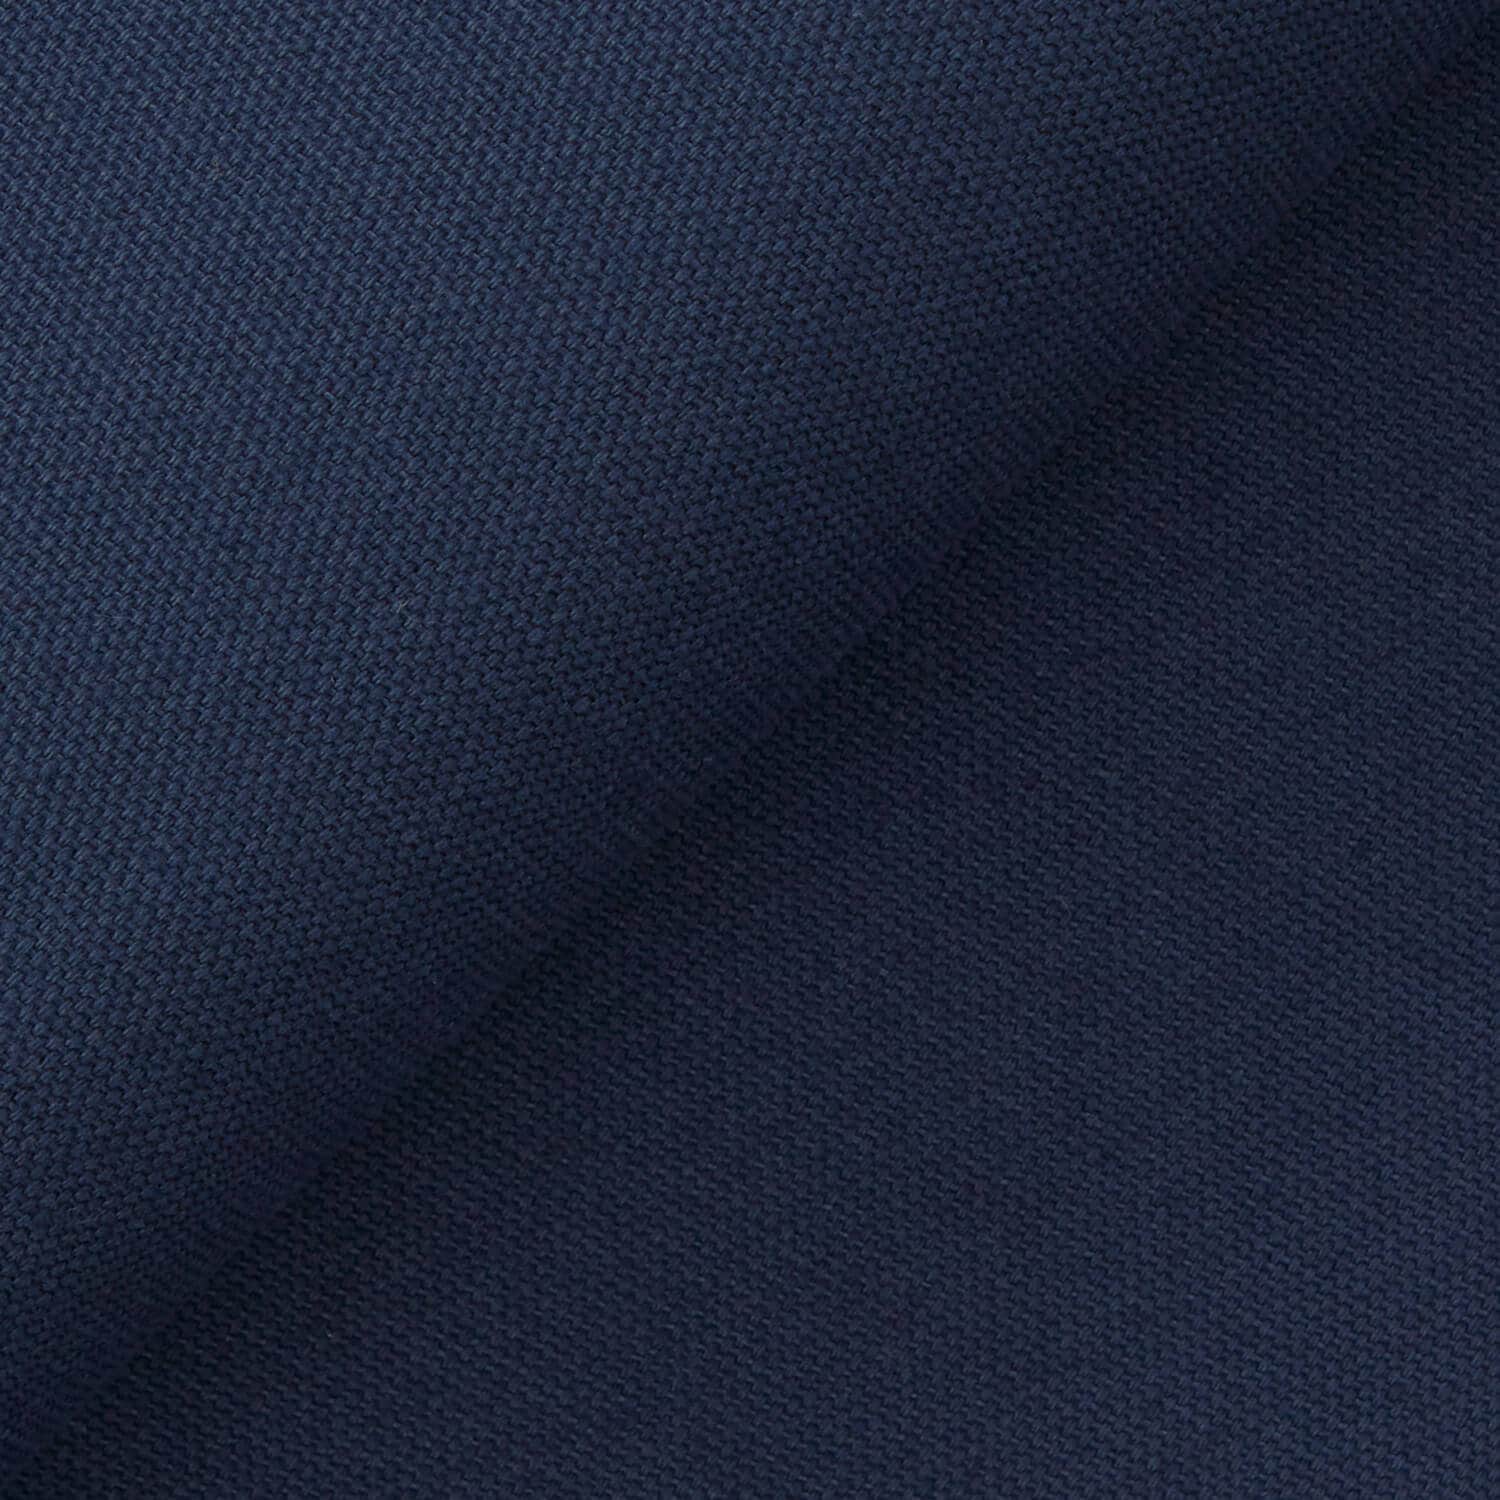 Fabric Wholesale Direct 7 oz Cotton Duck Canvas Fabric